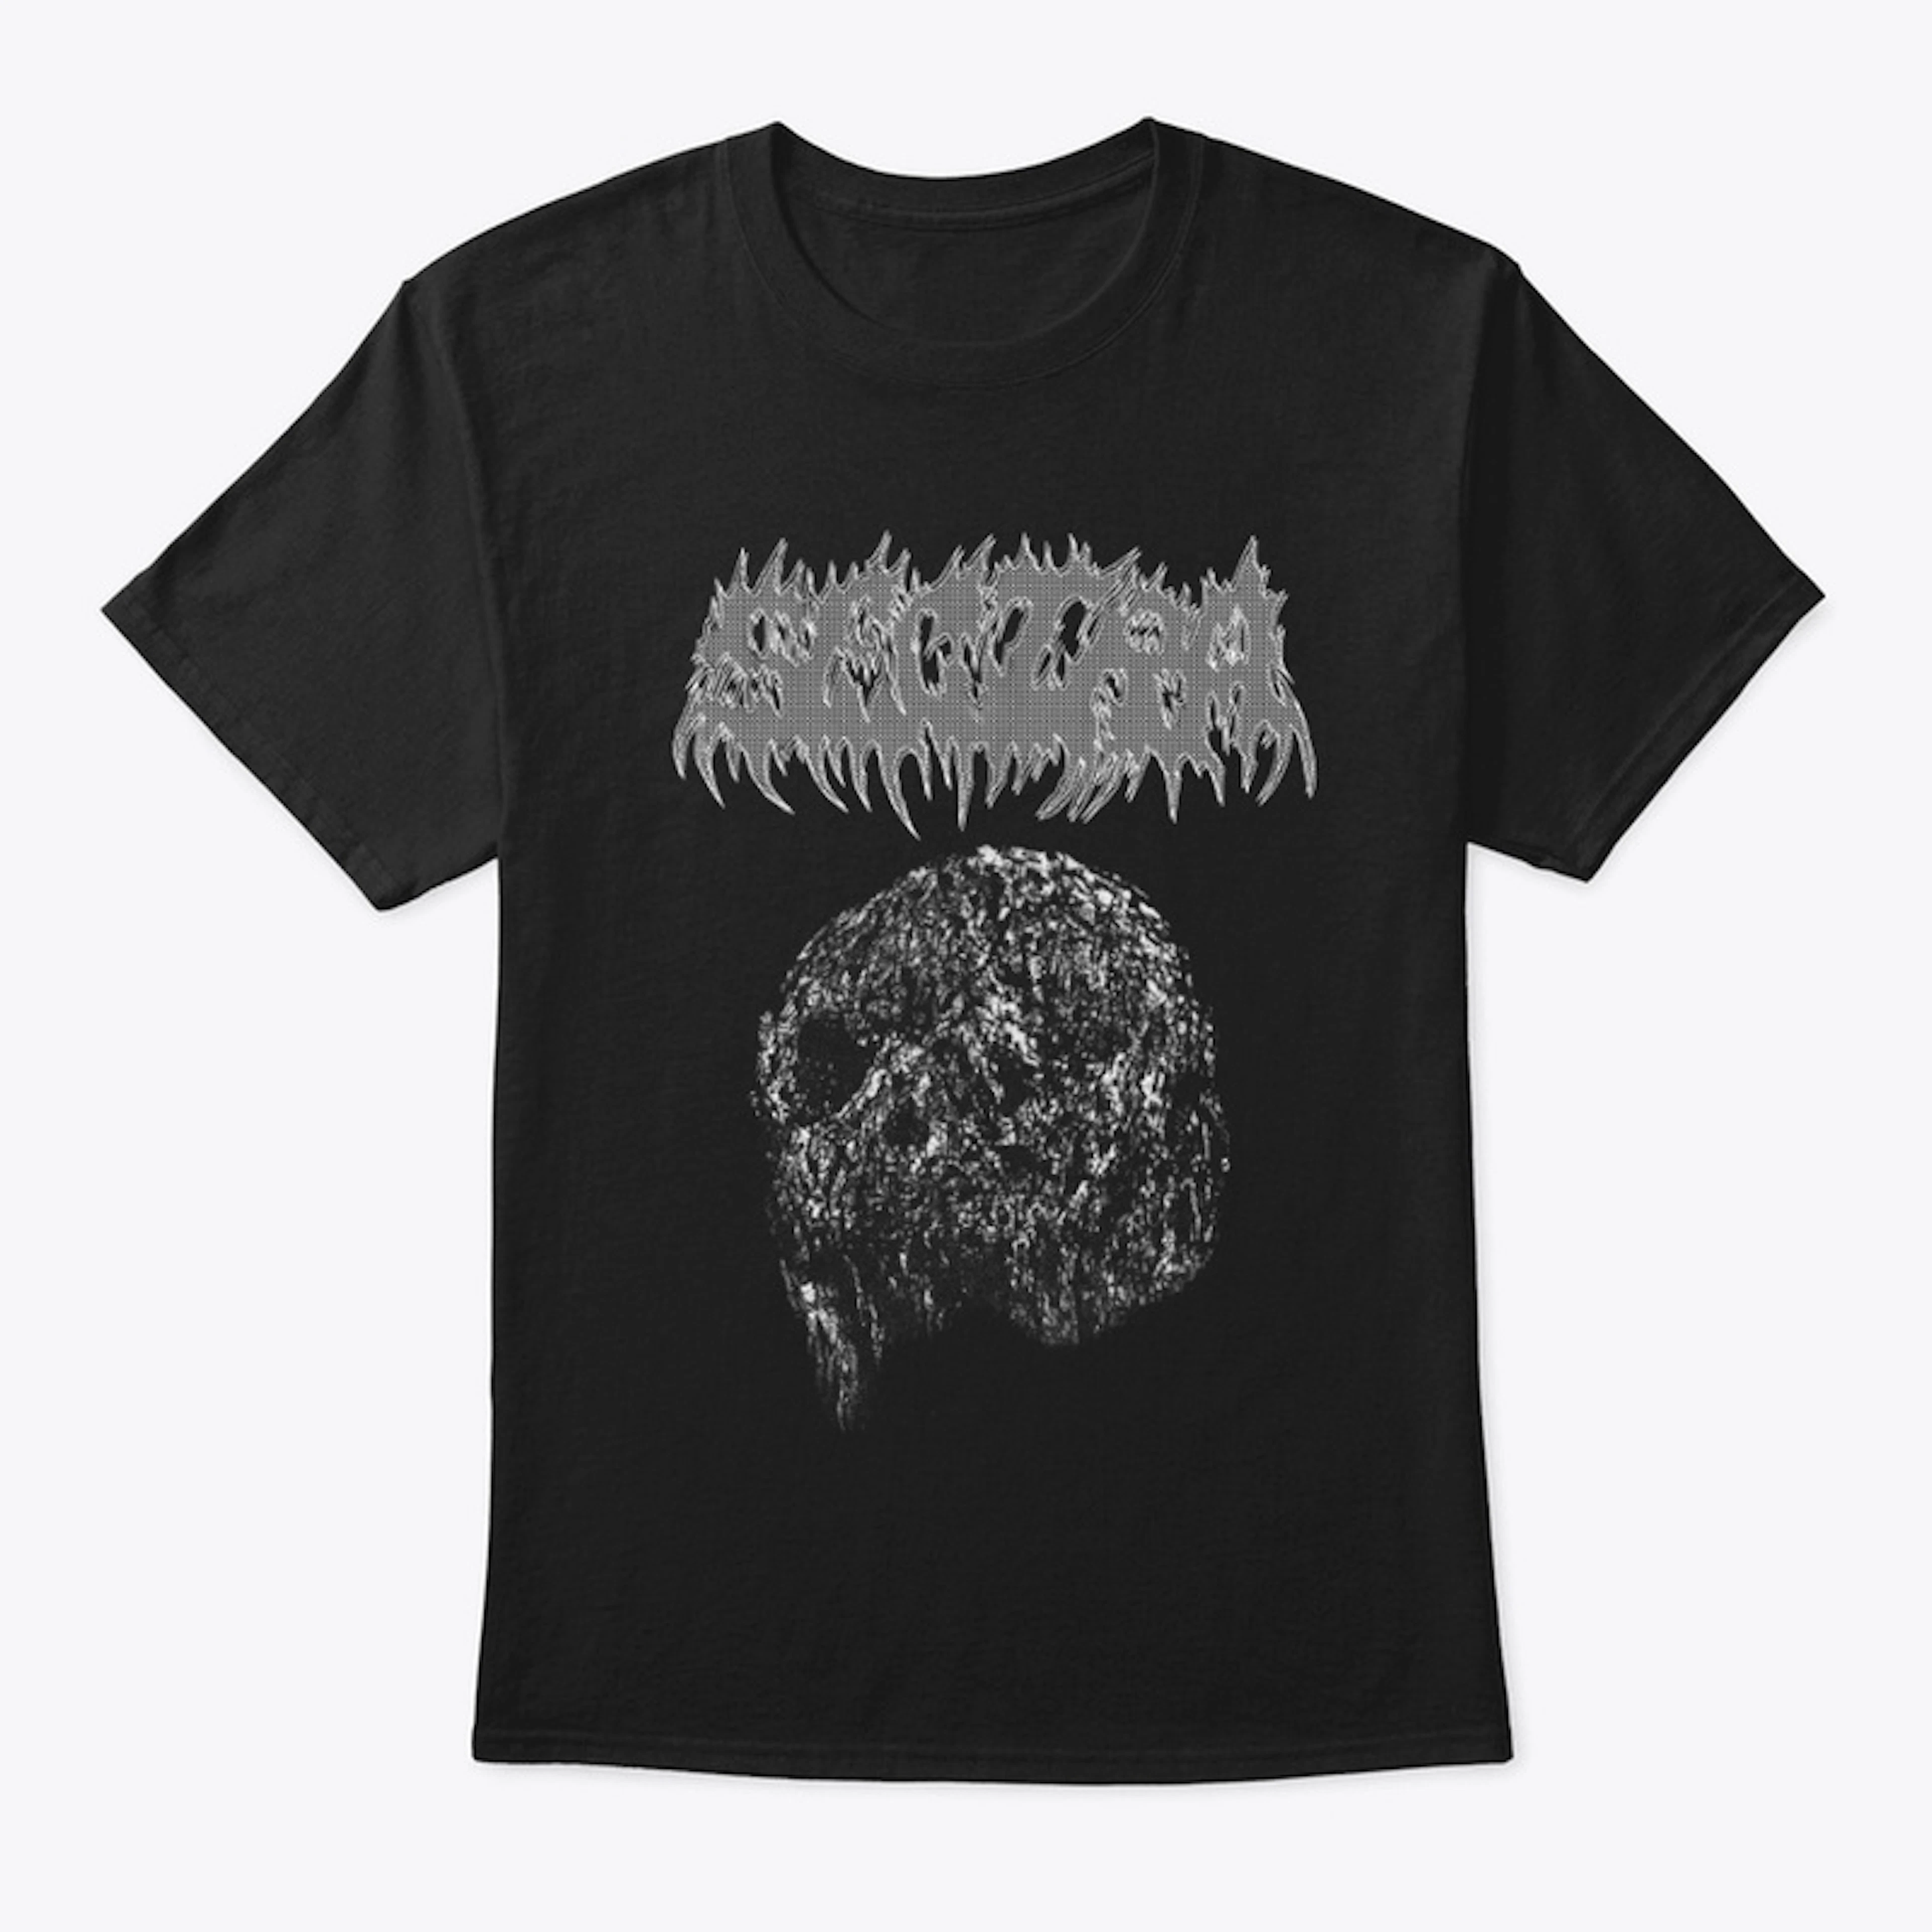 "Death Metal" Shirt